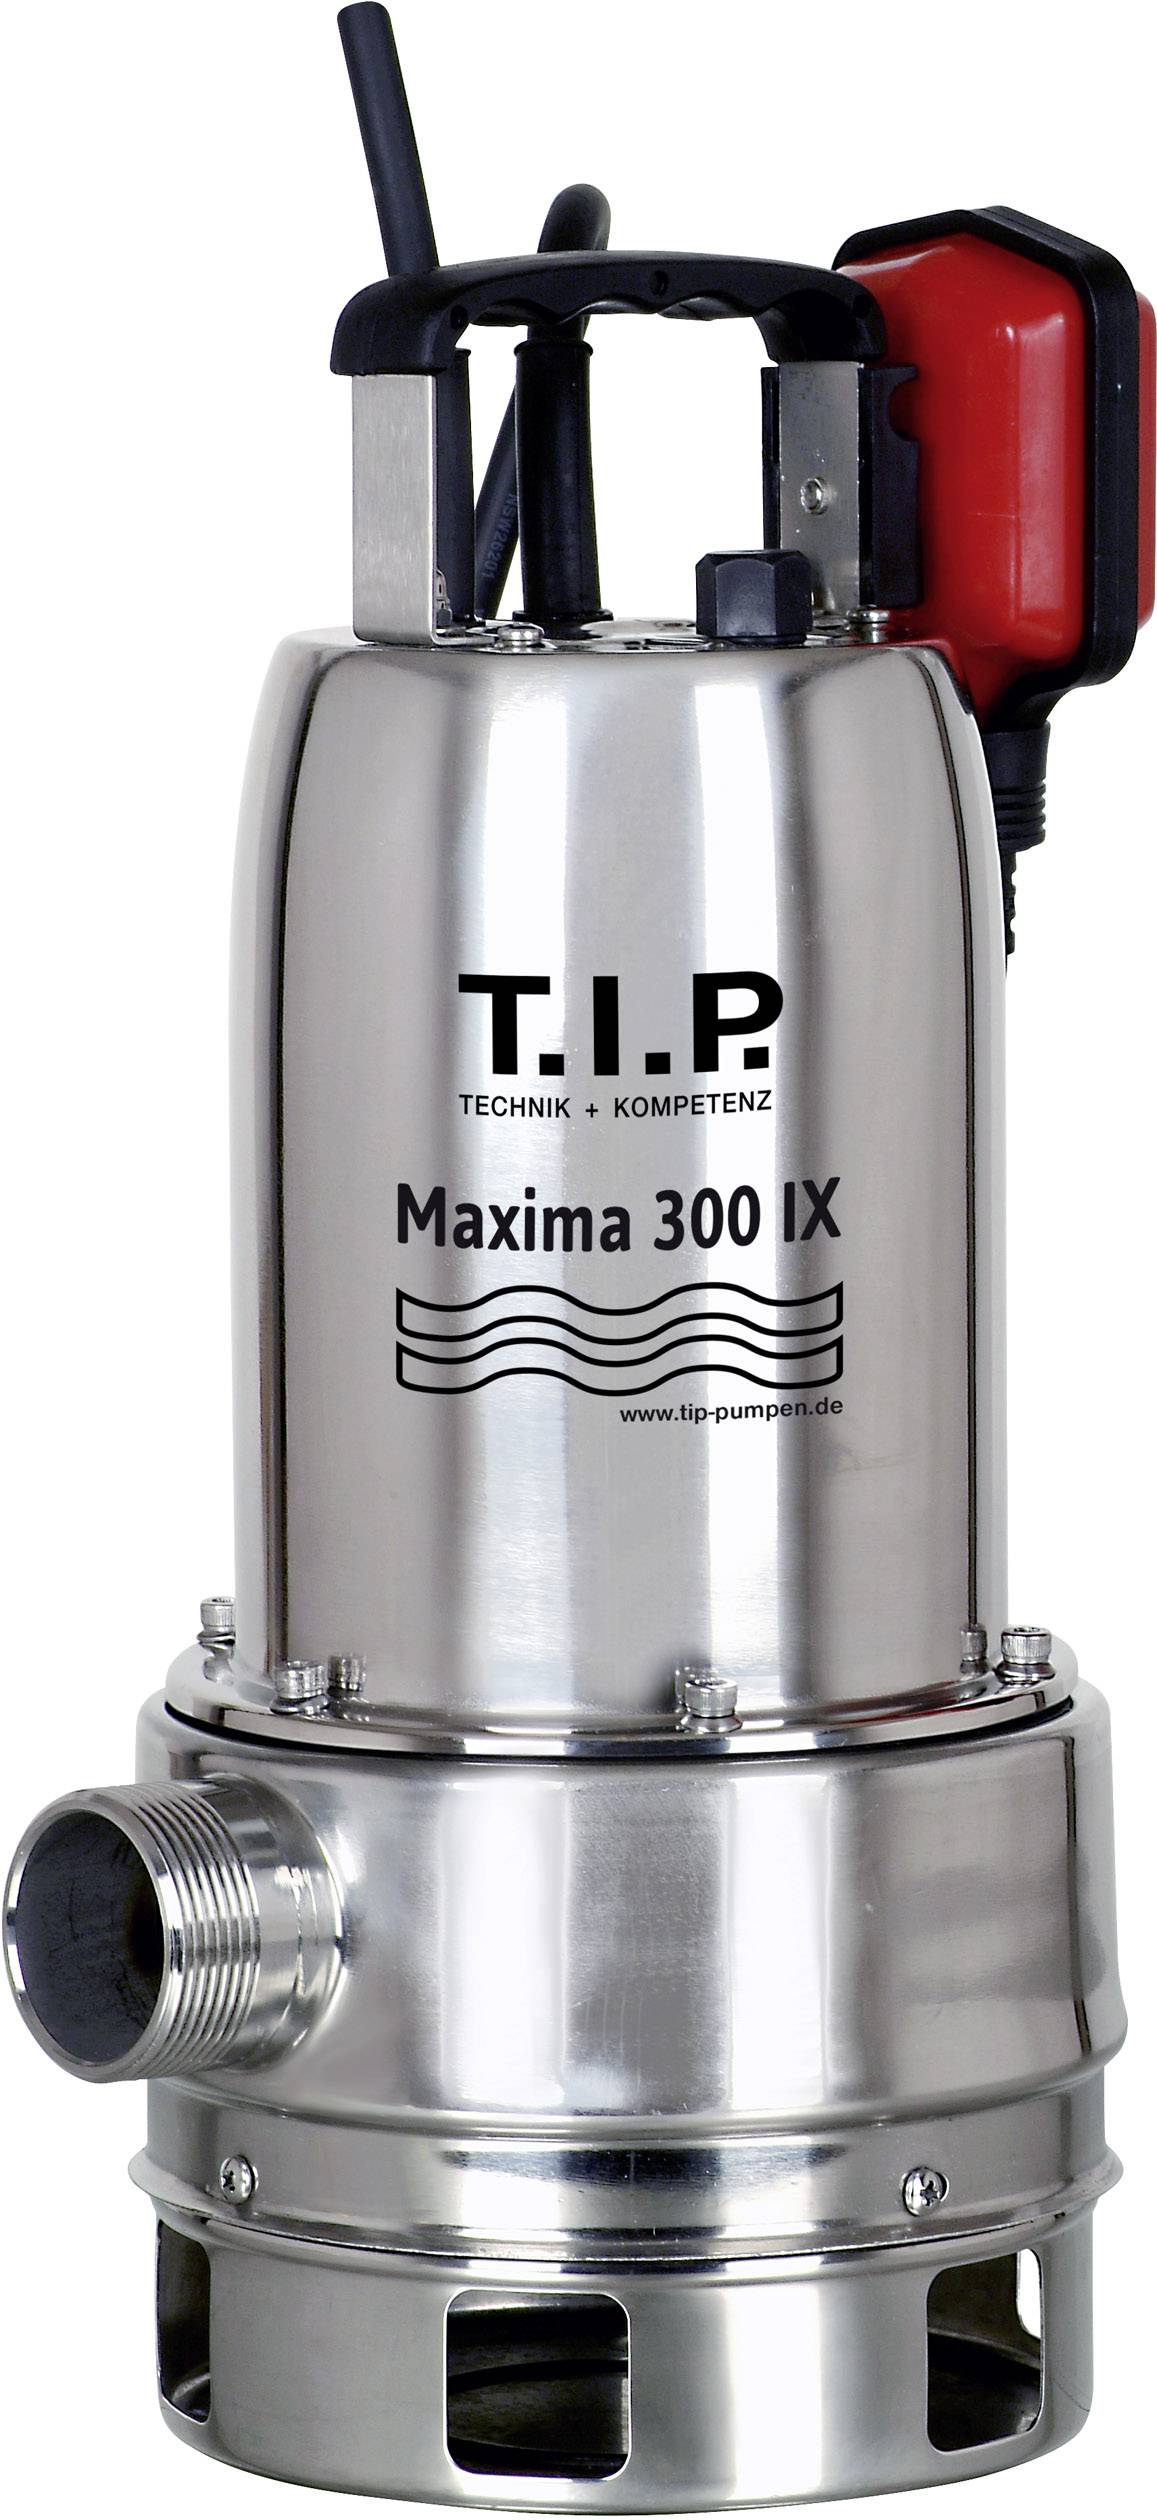 T.I.P. - Technische Industrie Produkte Maxima 300 IX 30116